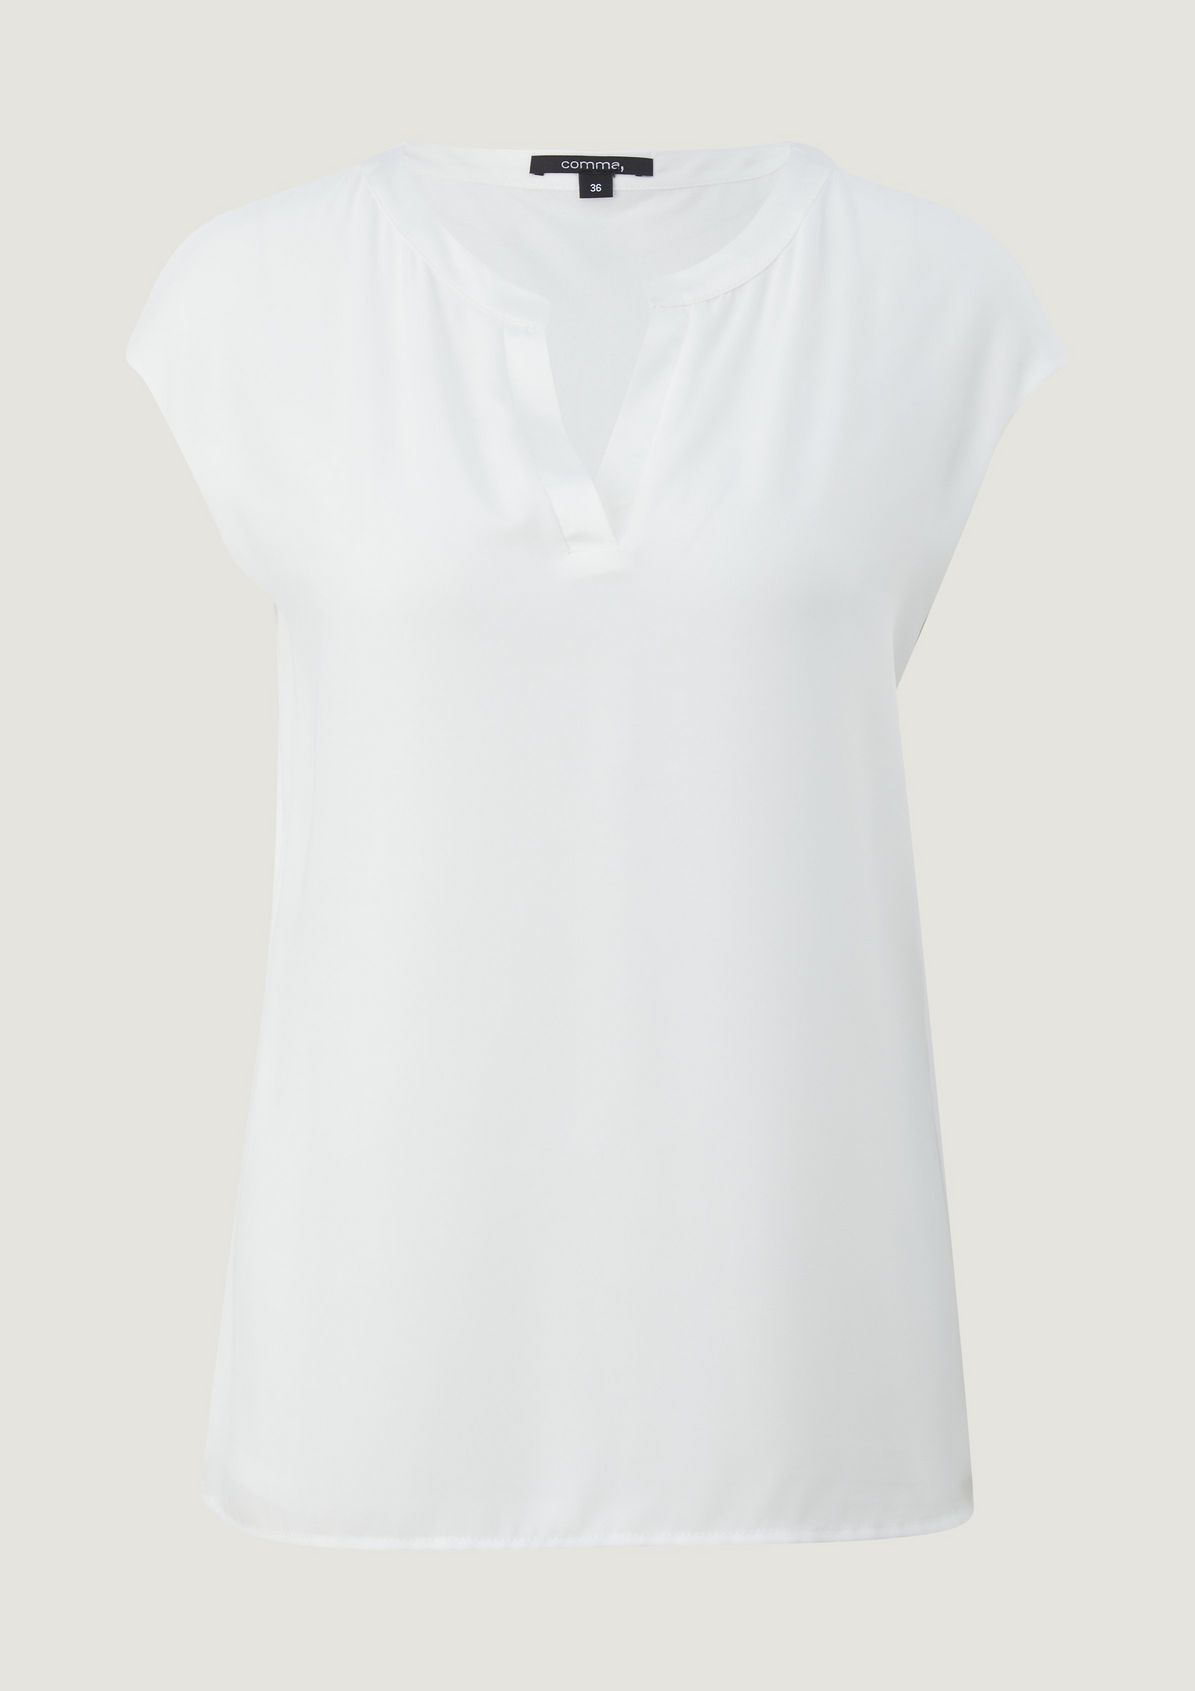 WOMEN FASHION Shirts & T-shirts Blouse Flowing discount 62% White M Sfera blouse 